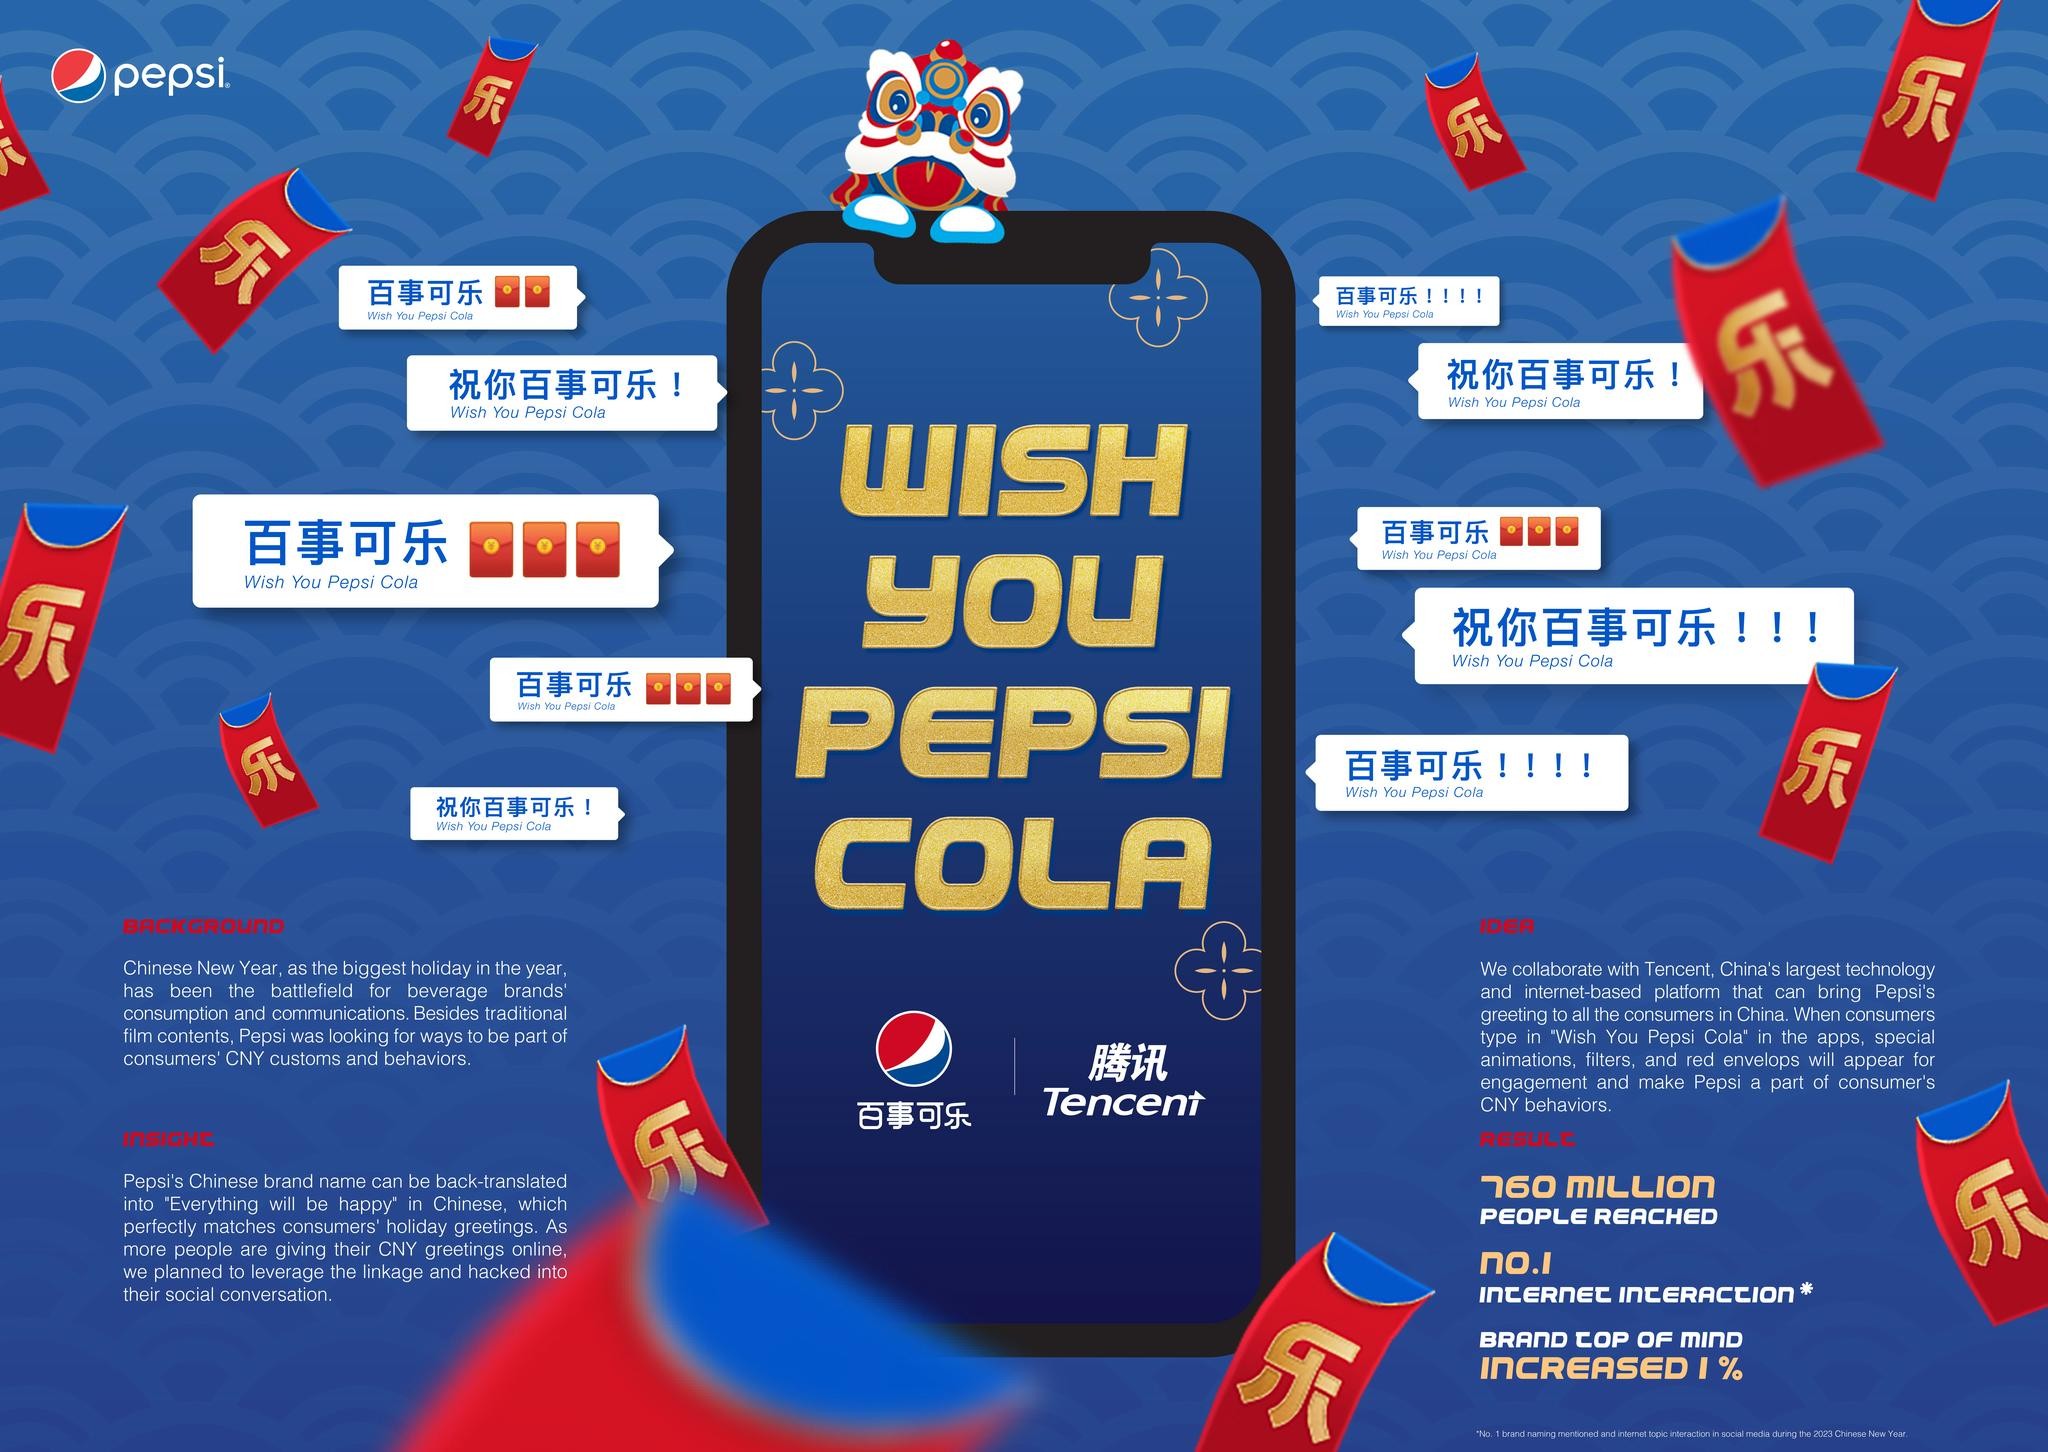 Pepsi  - "Wish You Pepsi Cola"